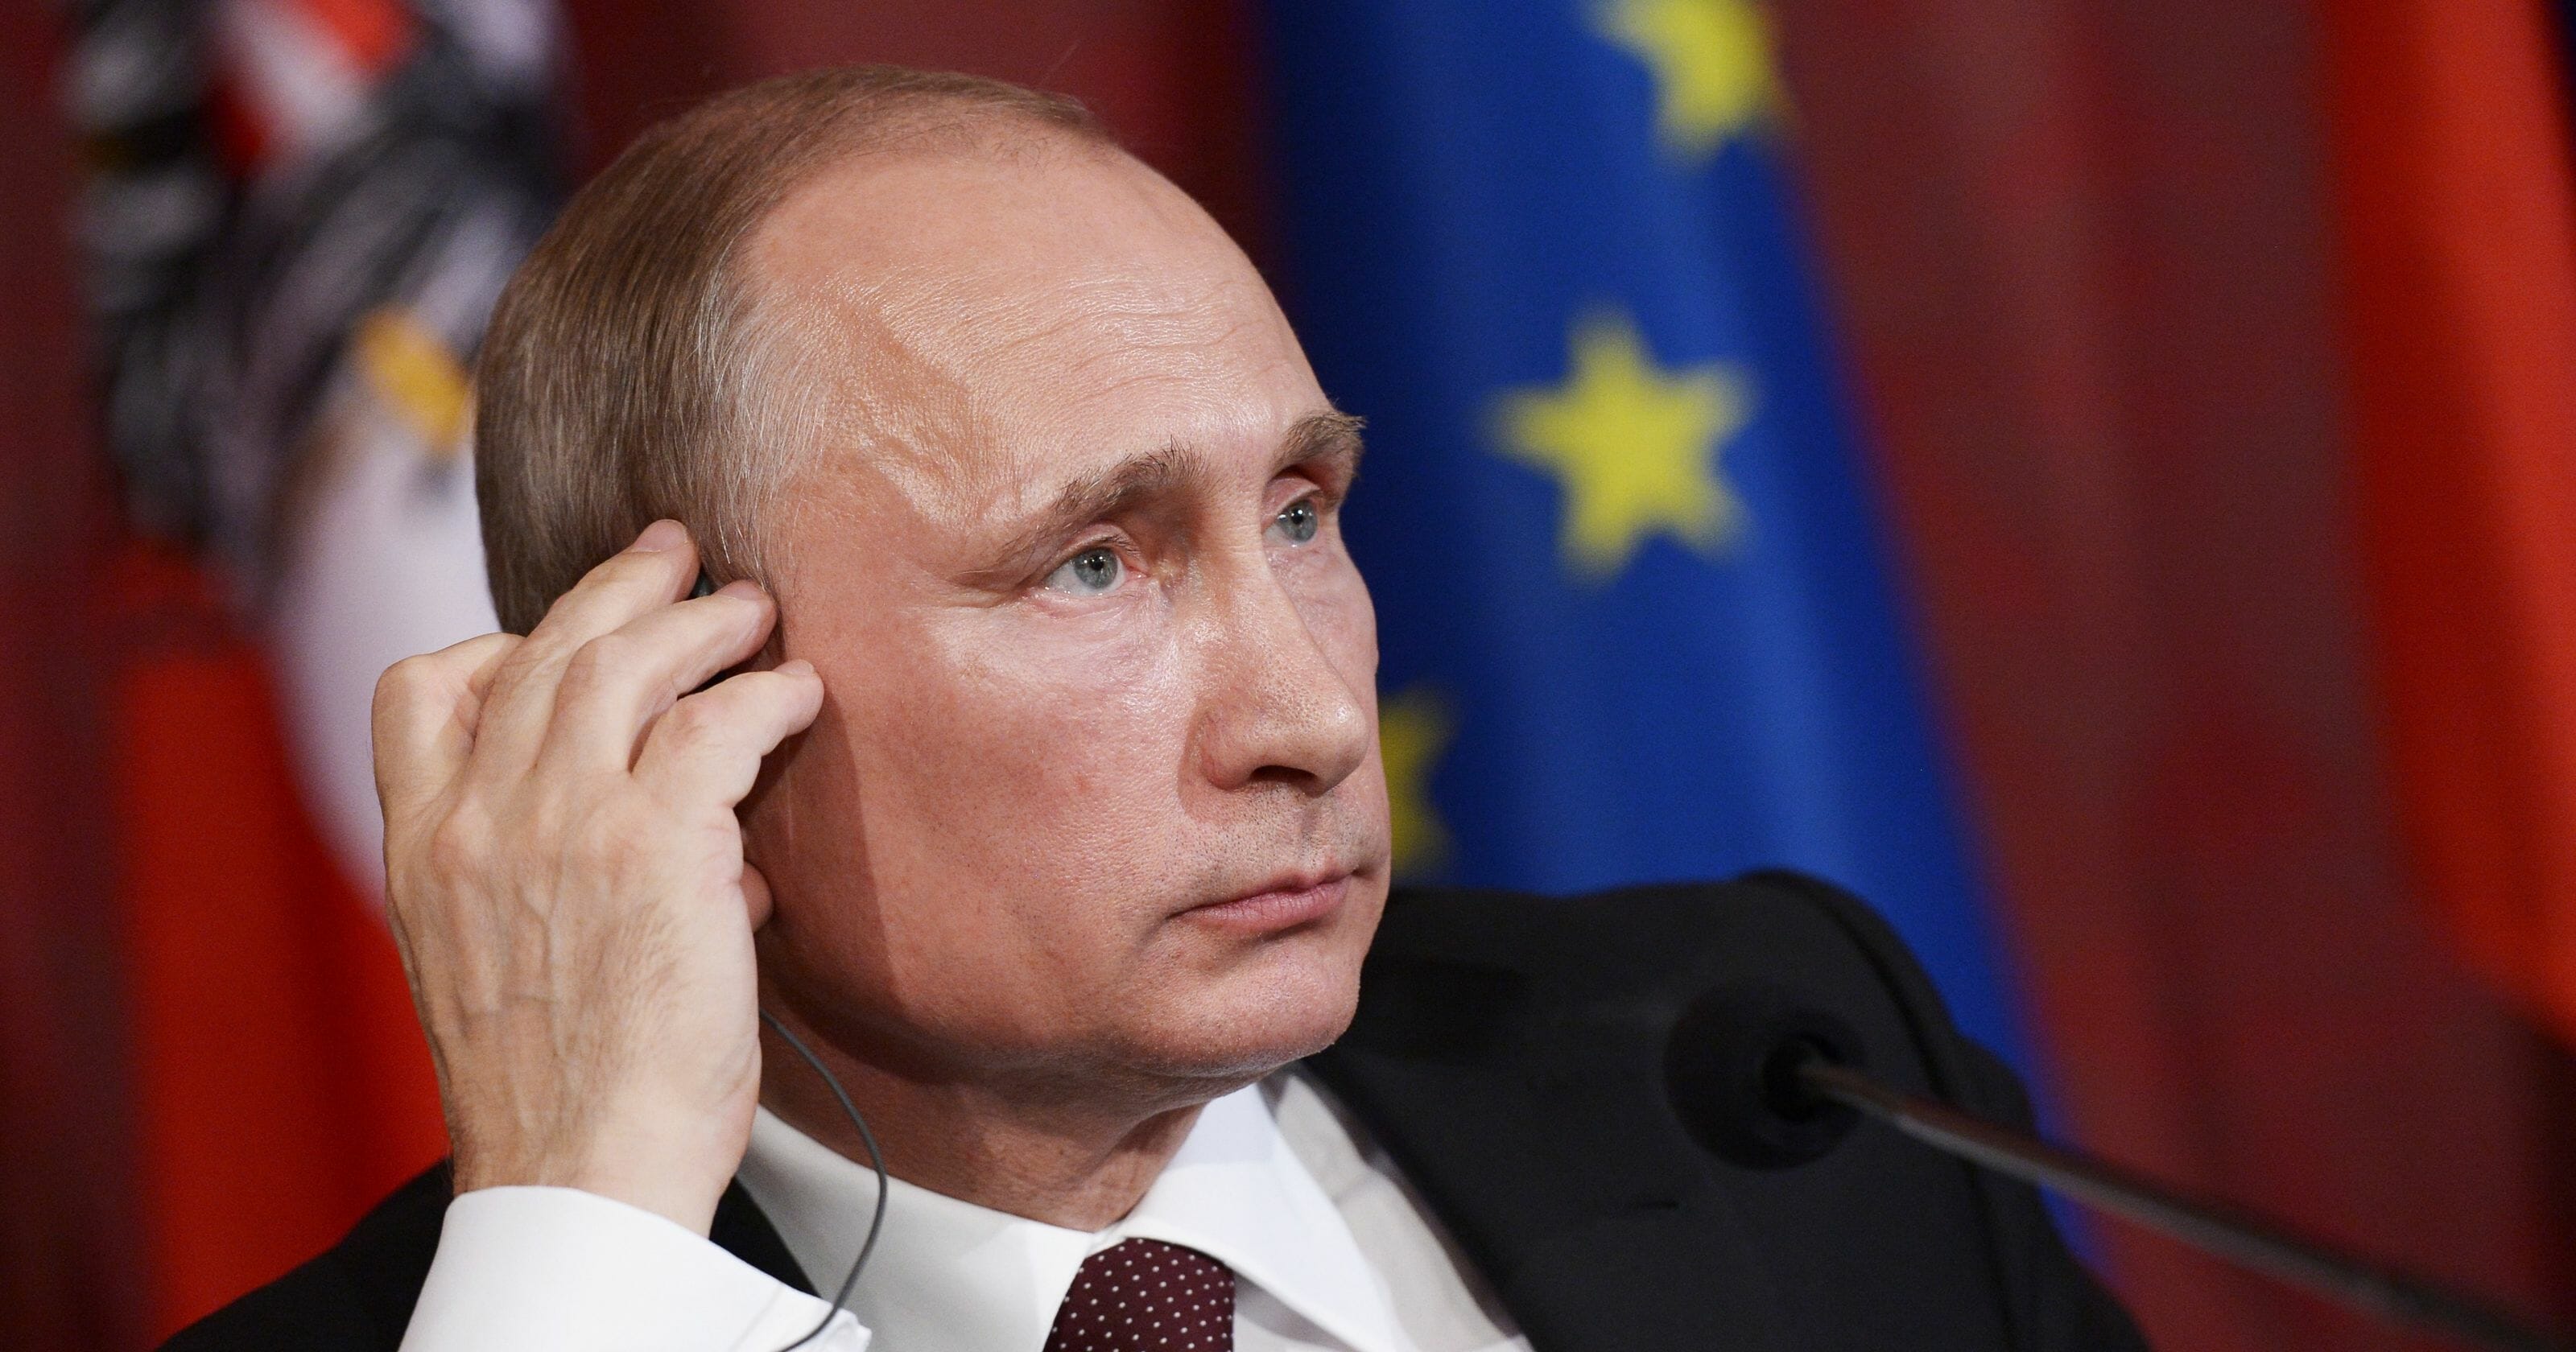 Vladimir Putin says Russia does not want to split the European Union